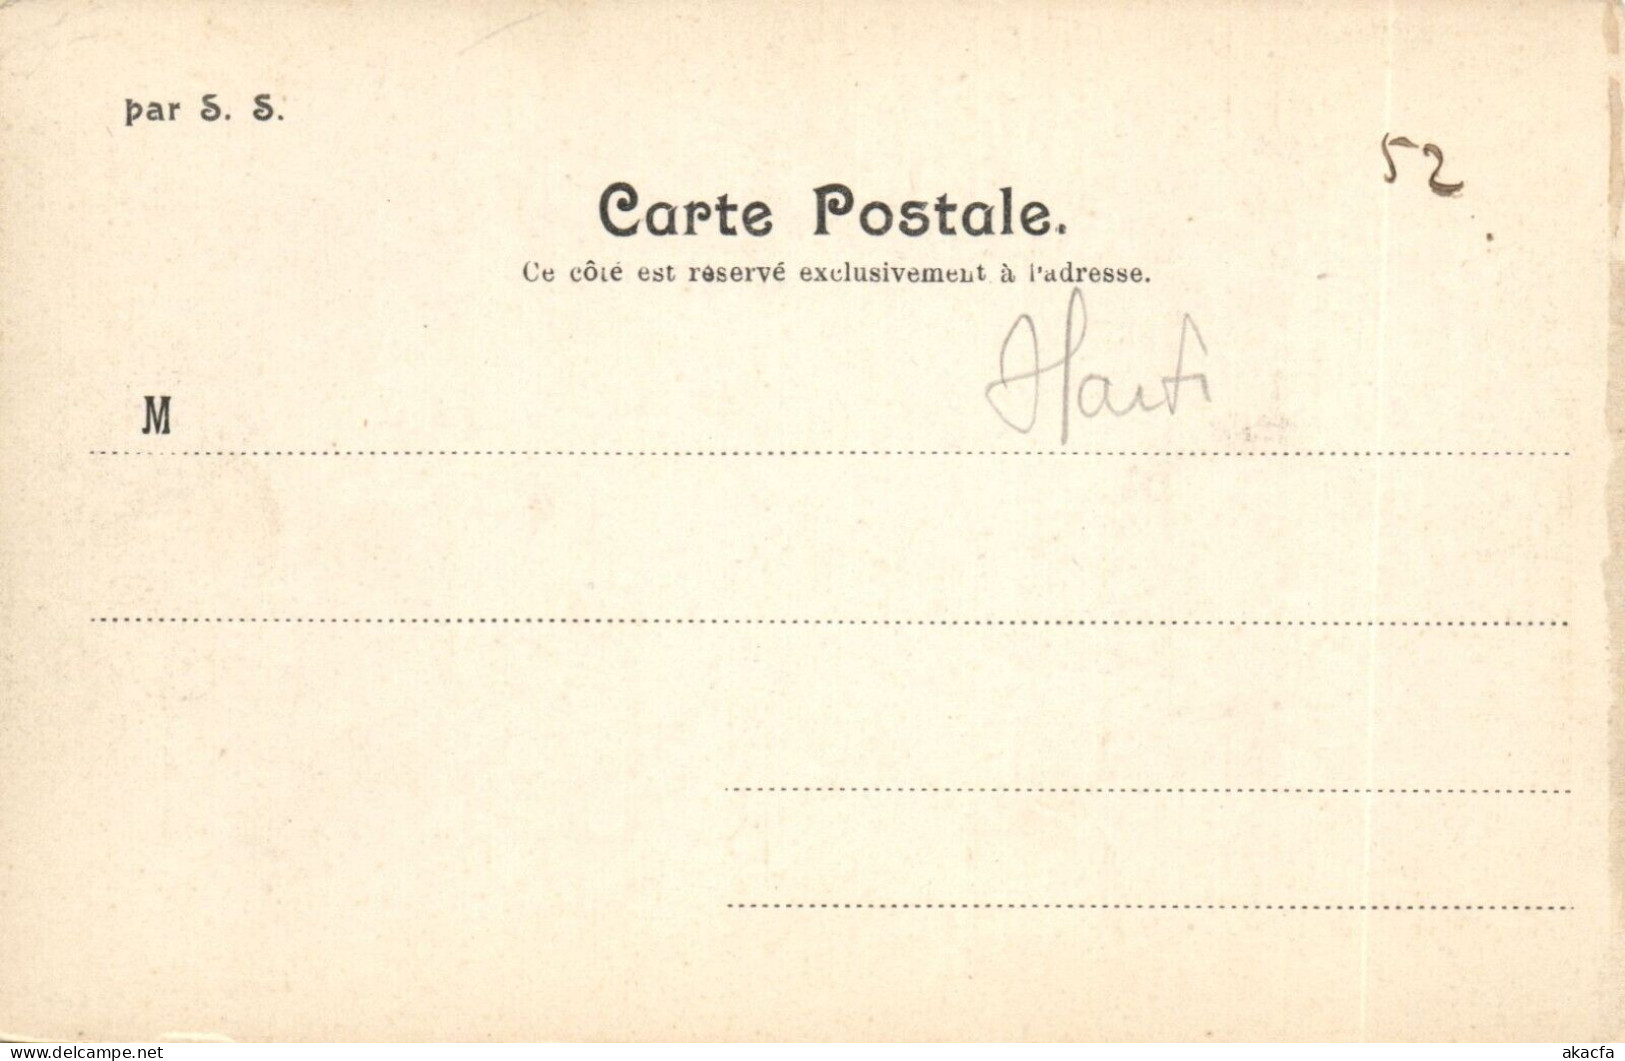 PC HAITI CARIBBEAN PORT-au-PRINCE CHAMBRE DES DEPUTES Vintage Postcard (b52062) - Haïti